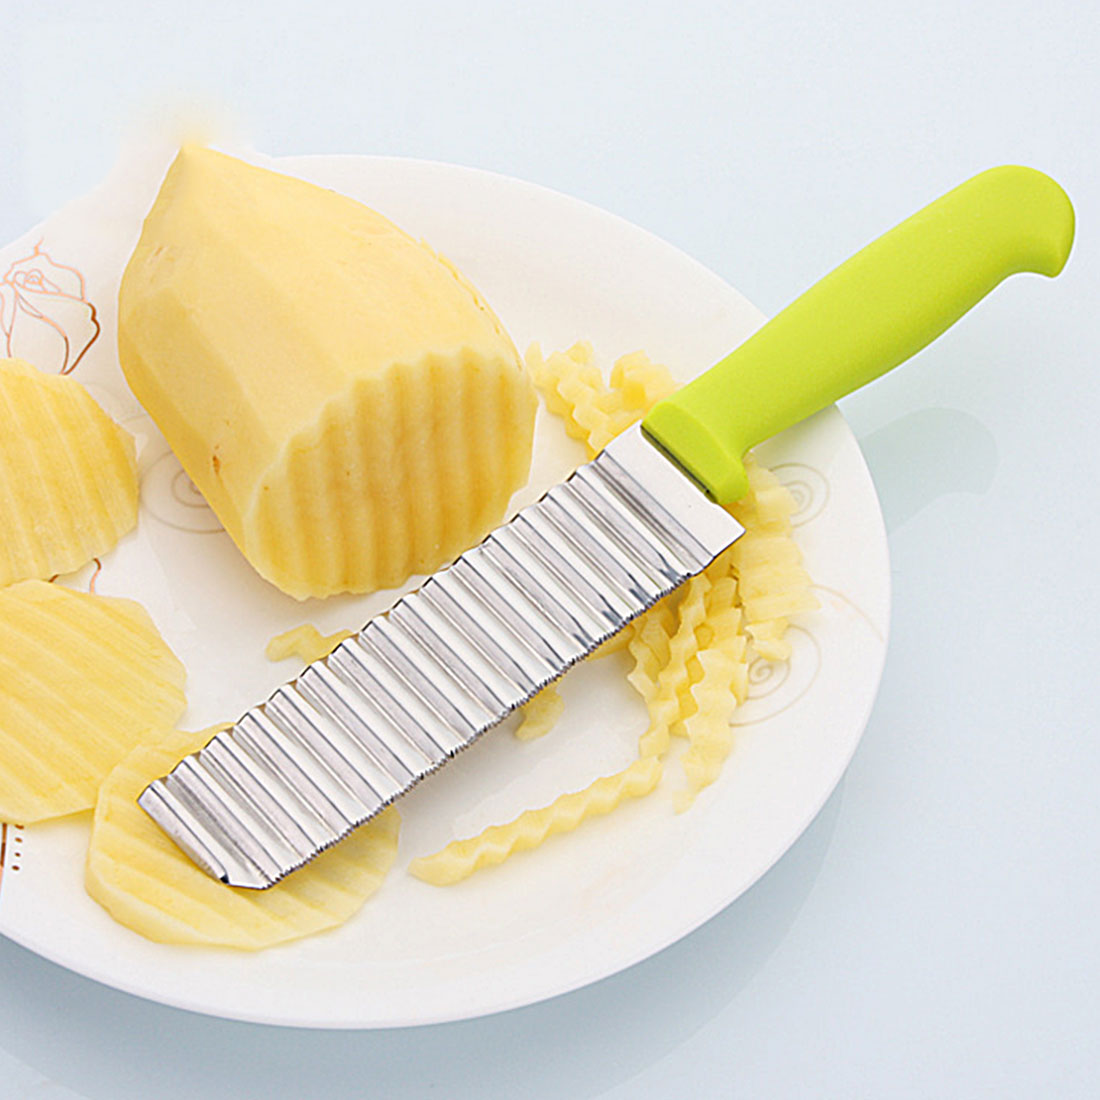 Novedoso cuchillo ondulado de acero inoxidable, cuchillo corrugado para cortar patatas fritas, cortador de virutas, rebanador, herramientas de cocina